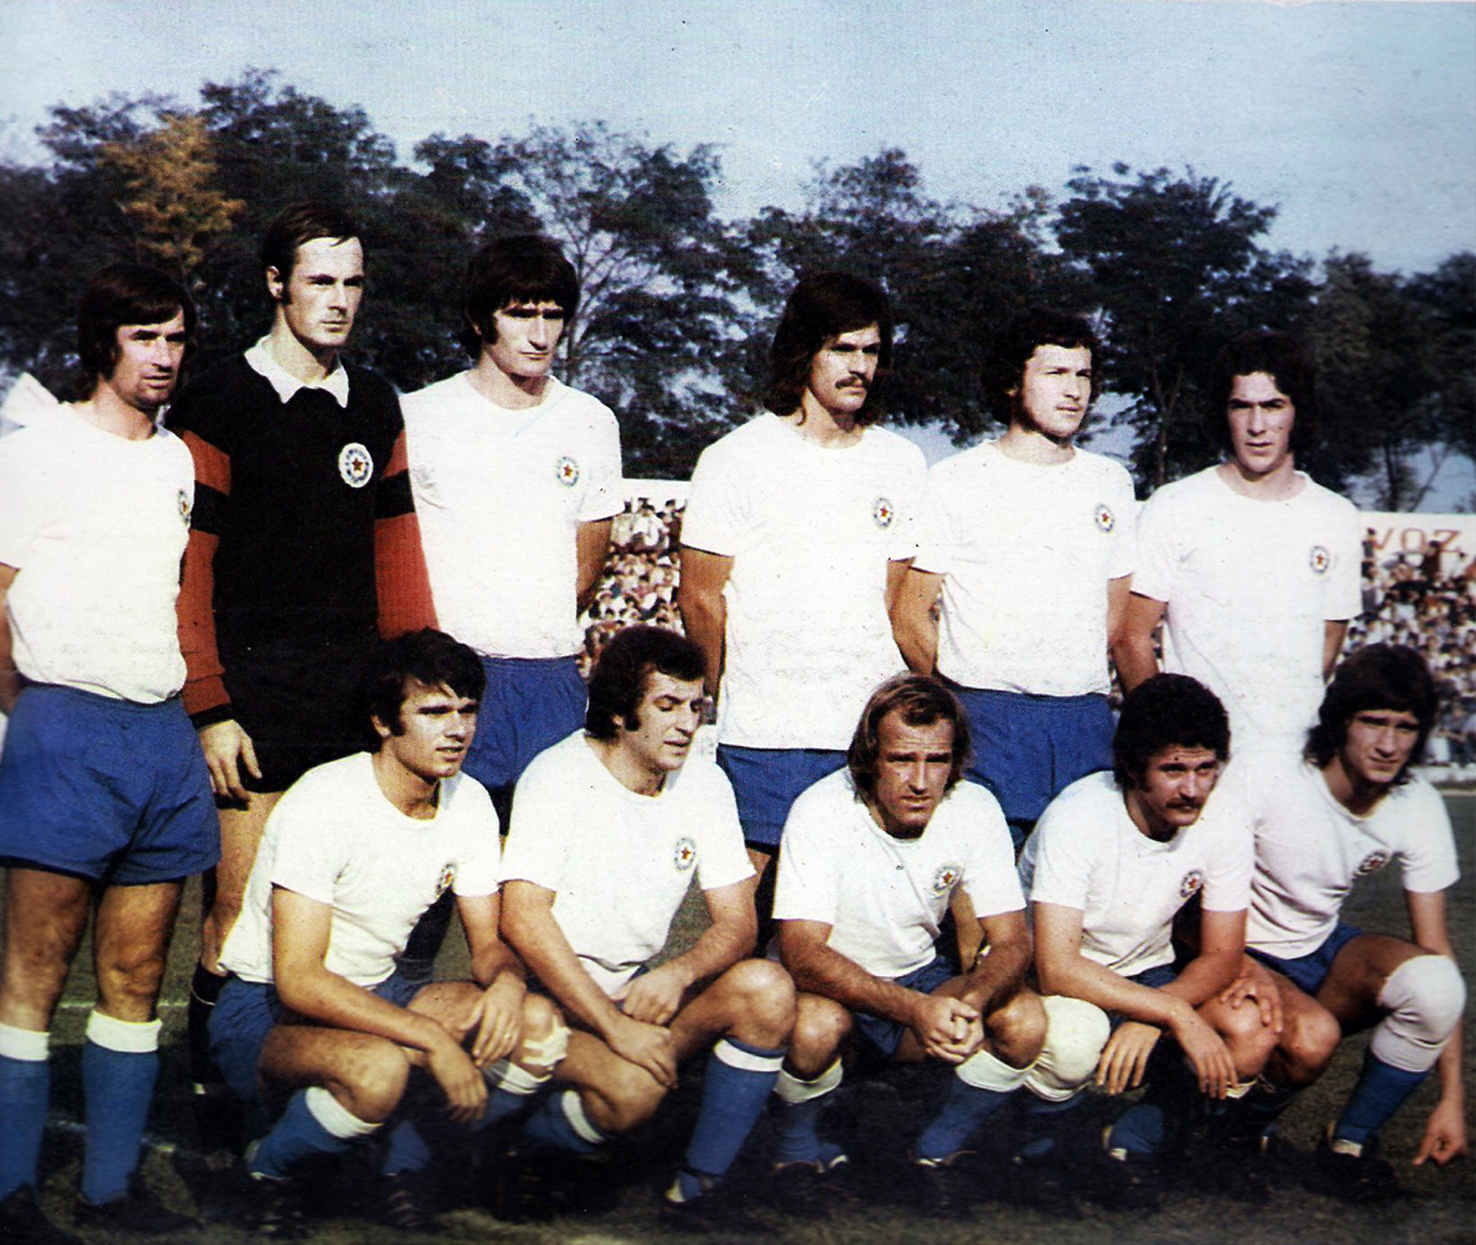 Hajduk Split Fora camisa de futebol 1973 - ?.